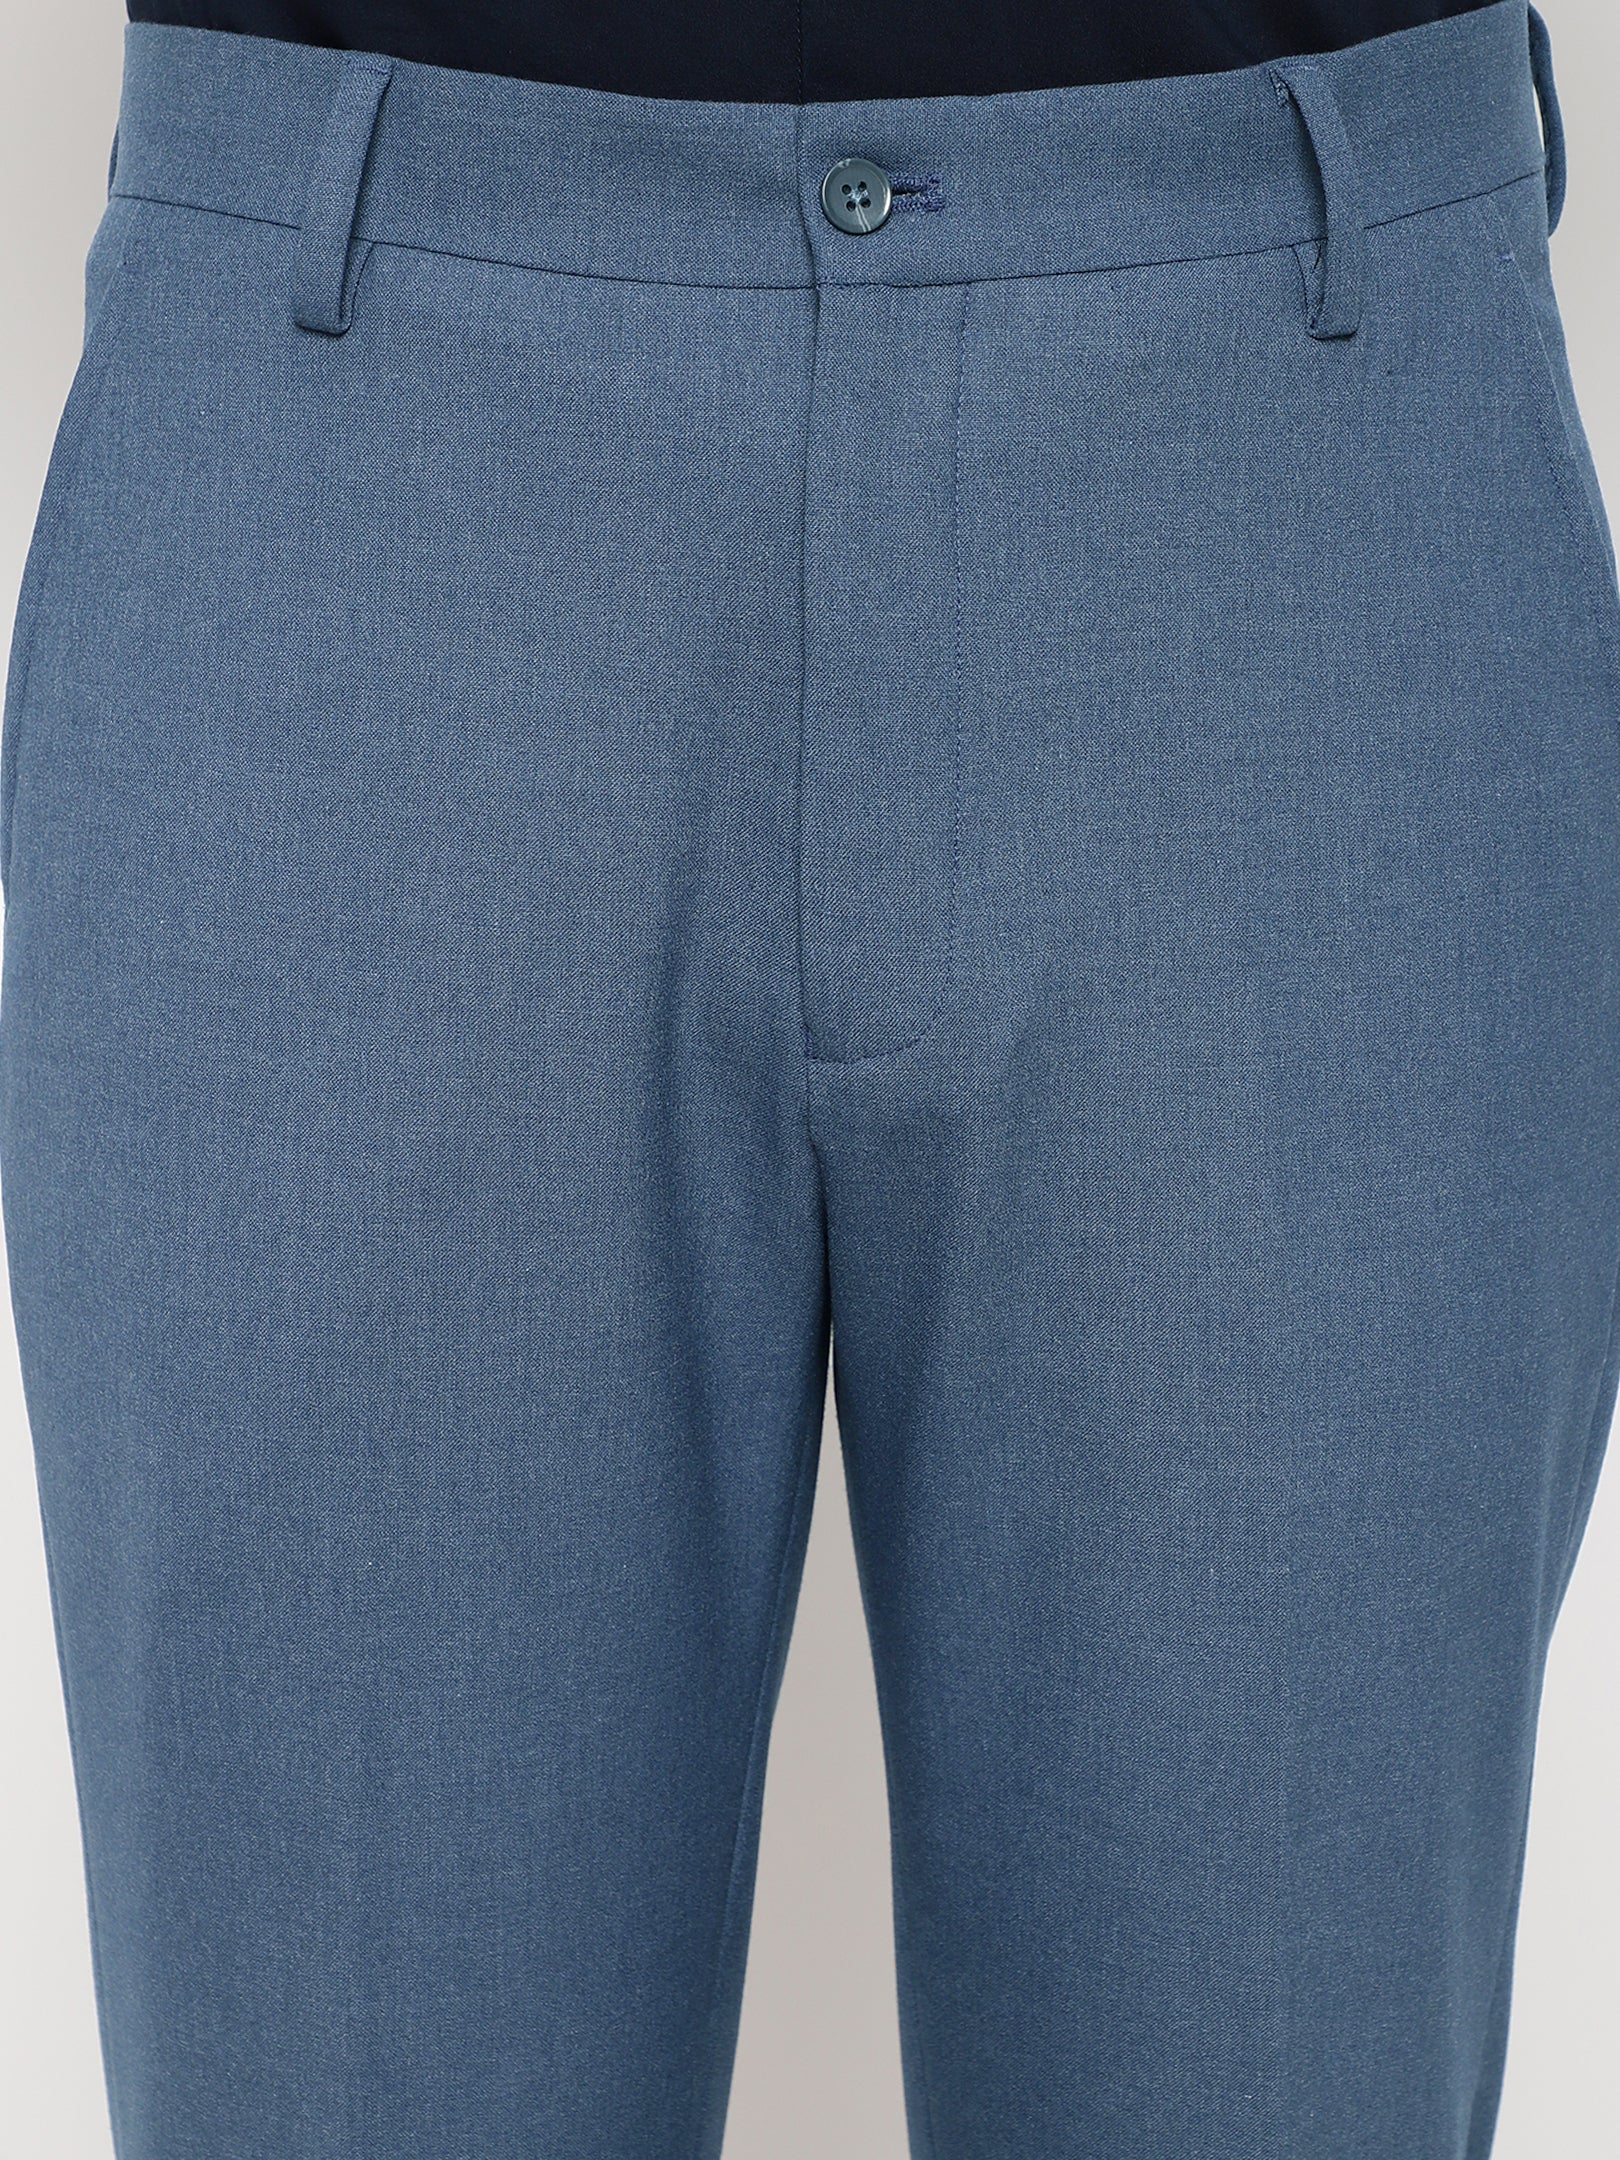 4-Way Stretch Formal Trousers in Steel Blue- Slim Fit